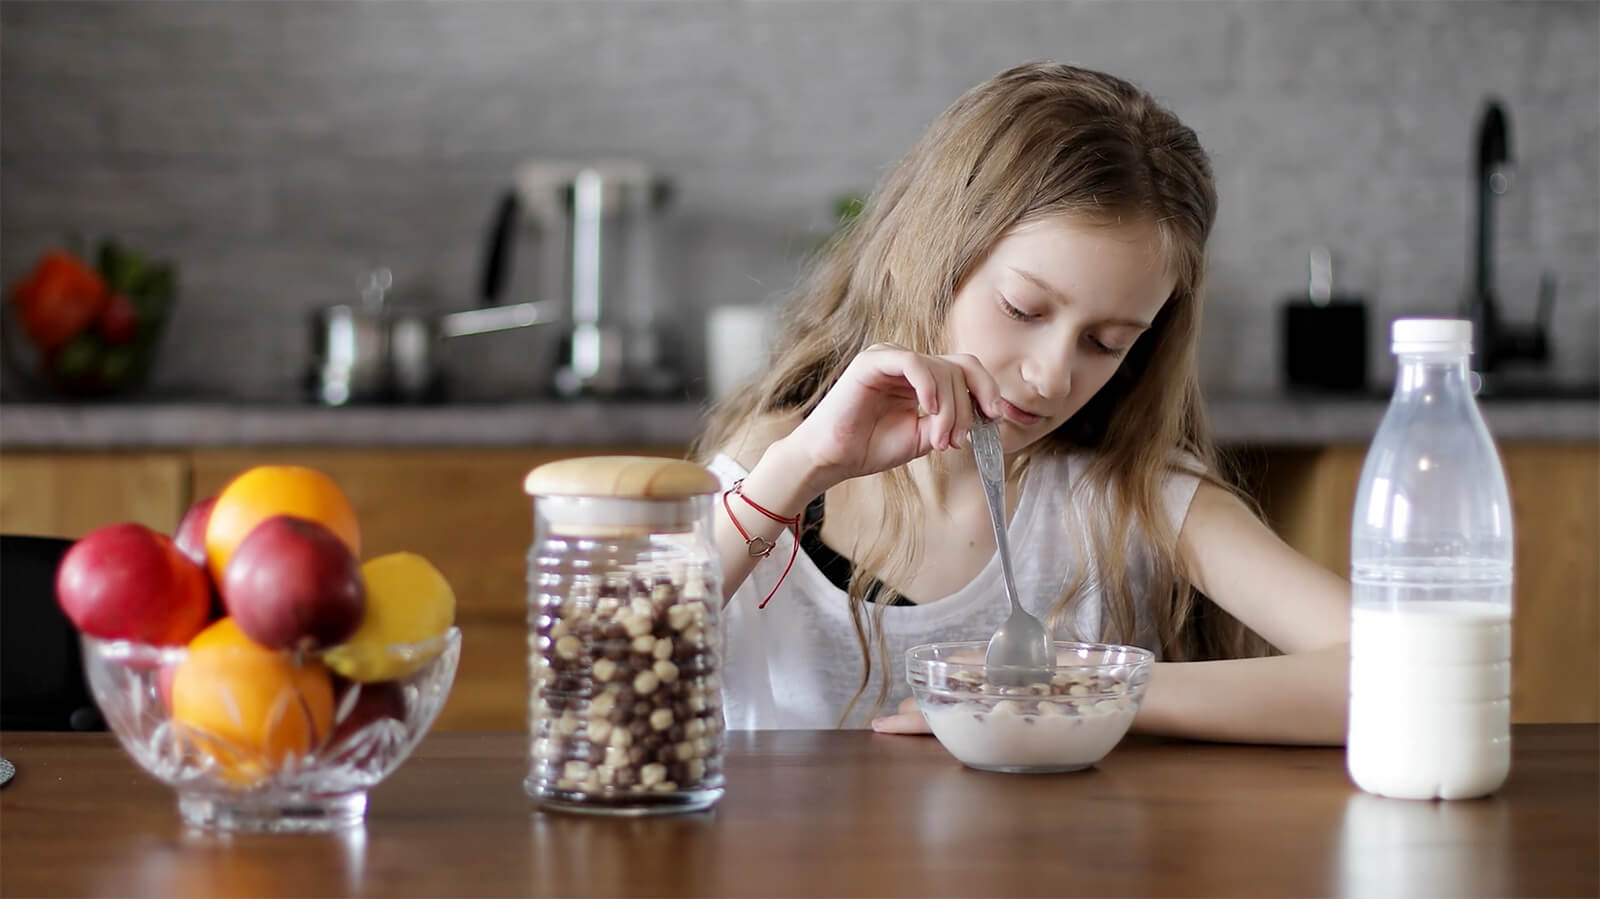 Girl stirring bowl of cereal